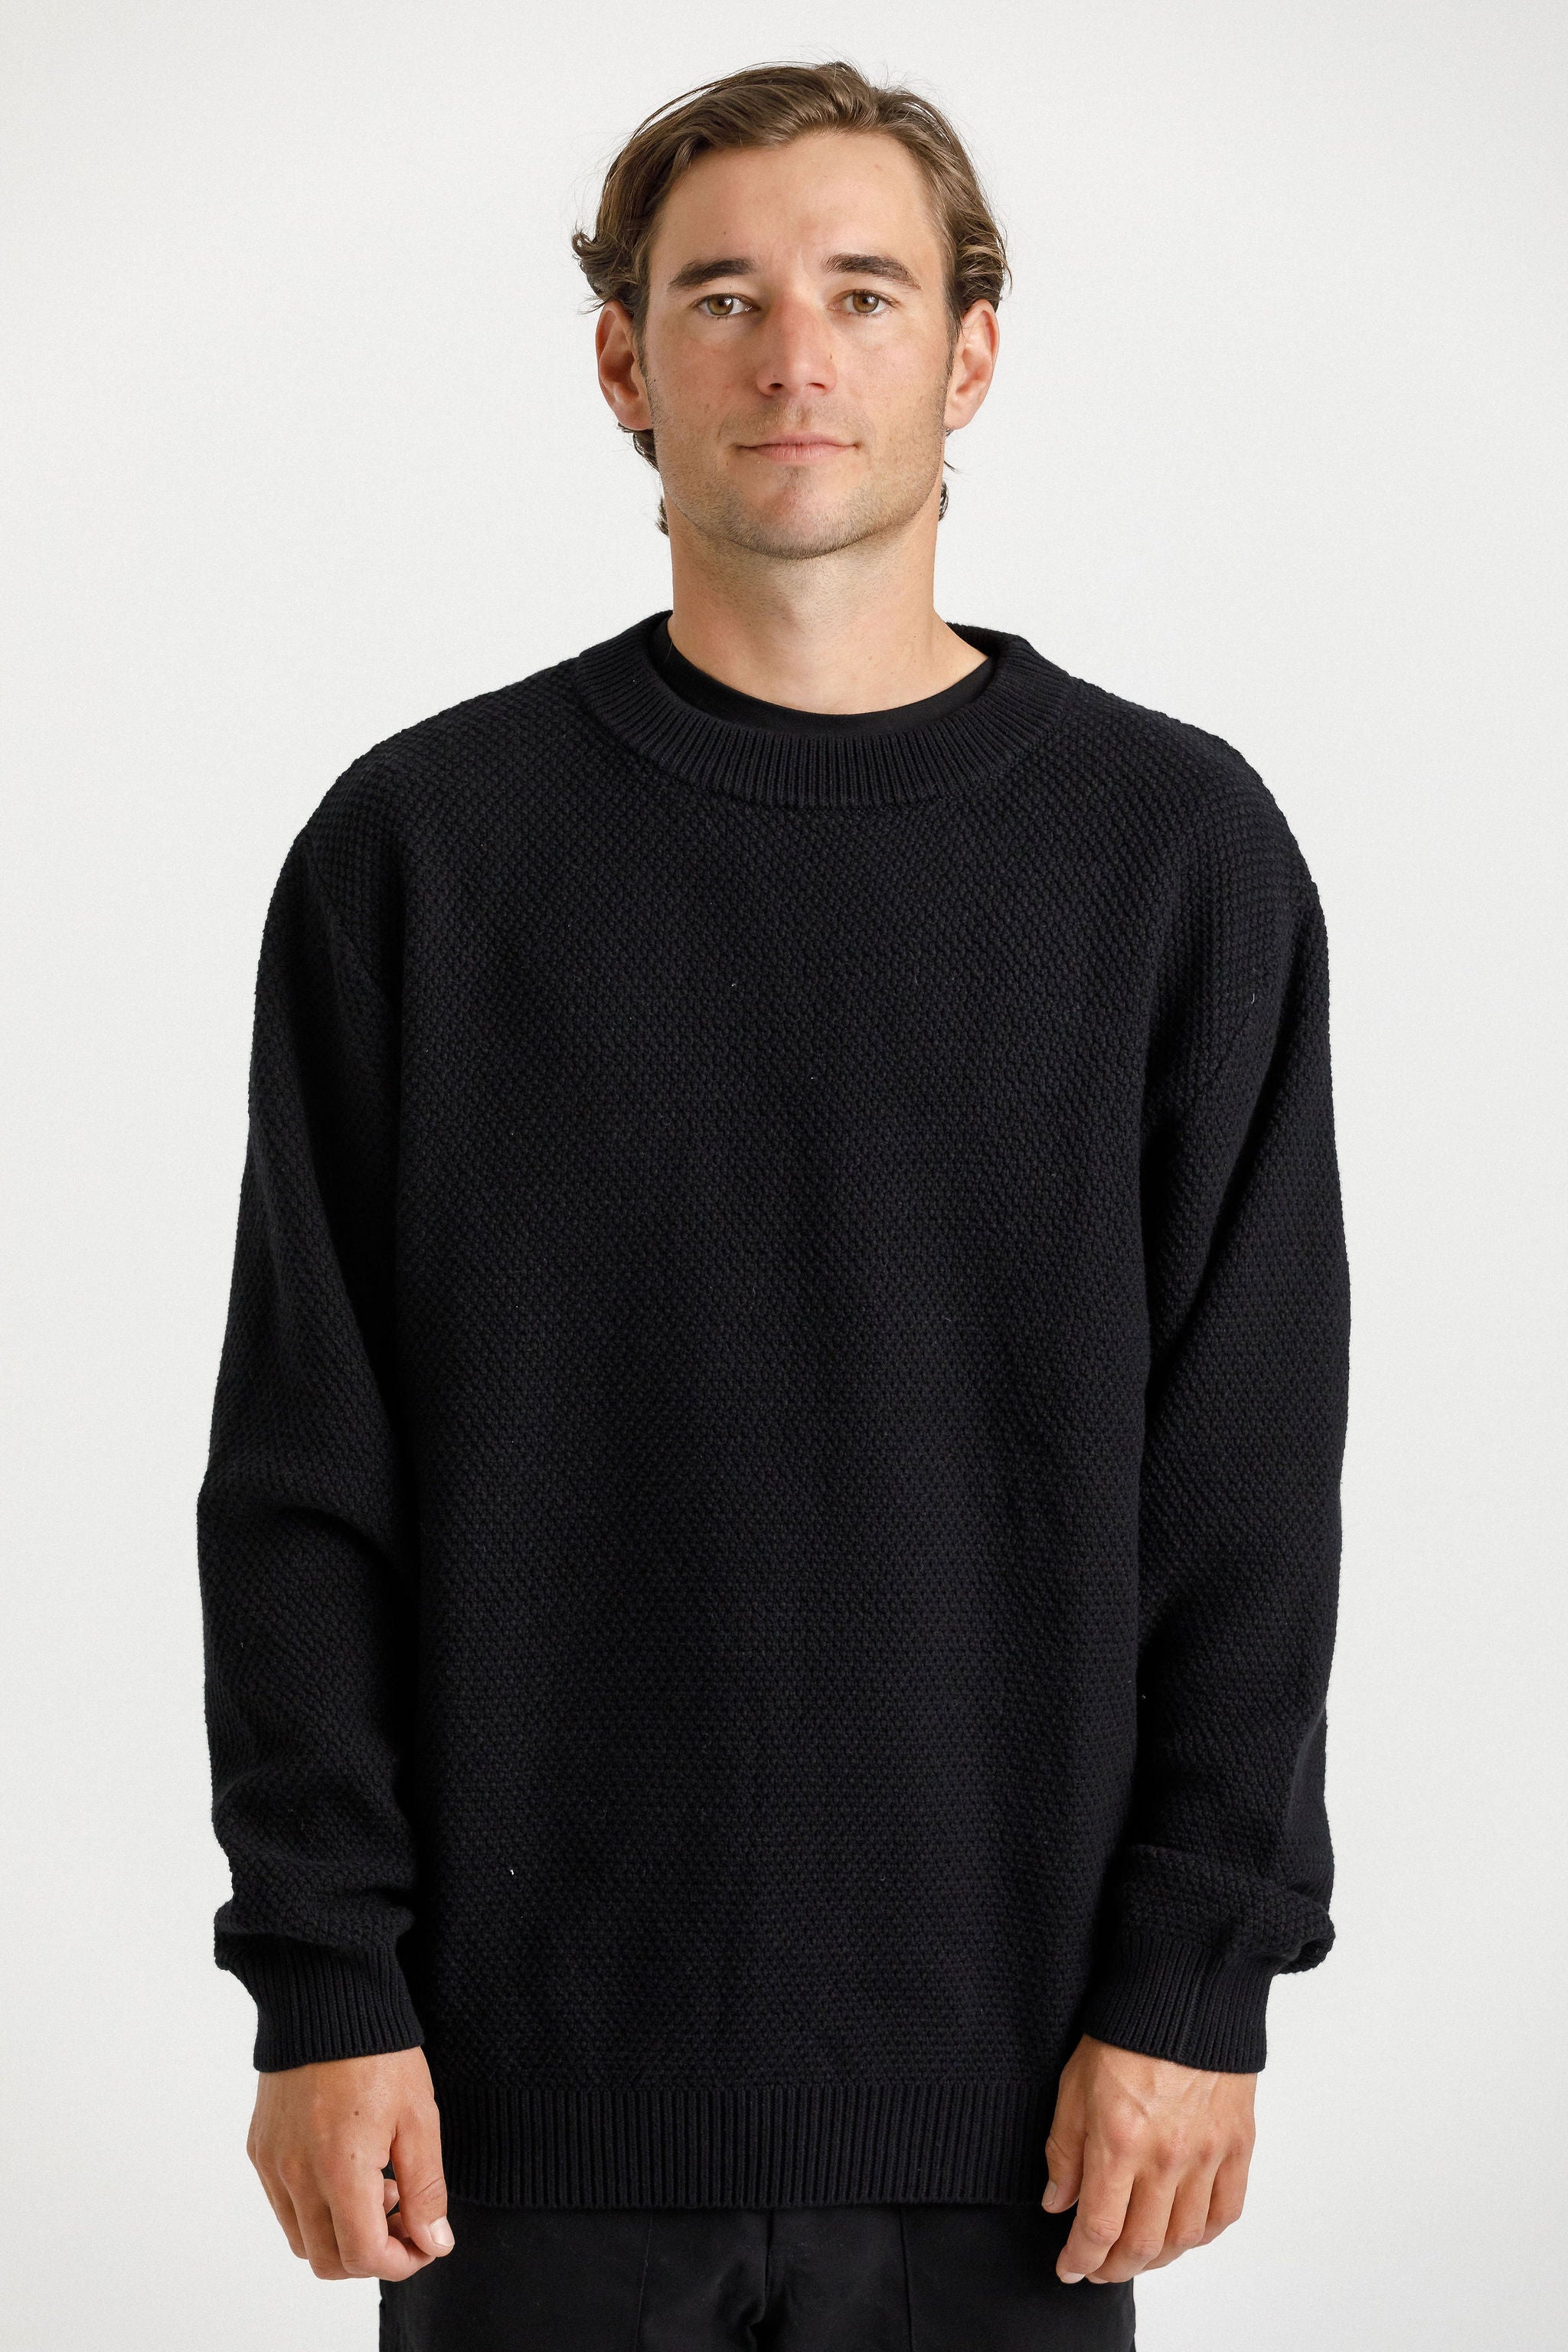 Attic Sweater - Sale - Black